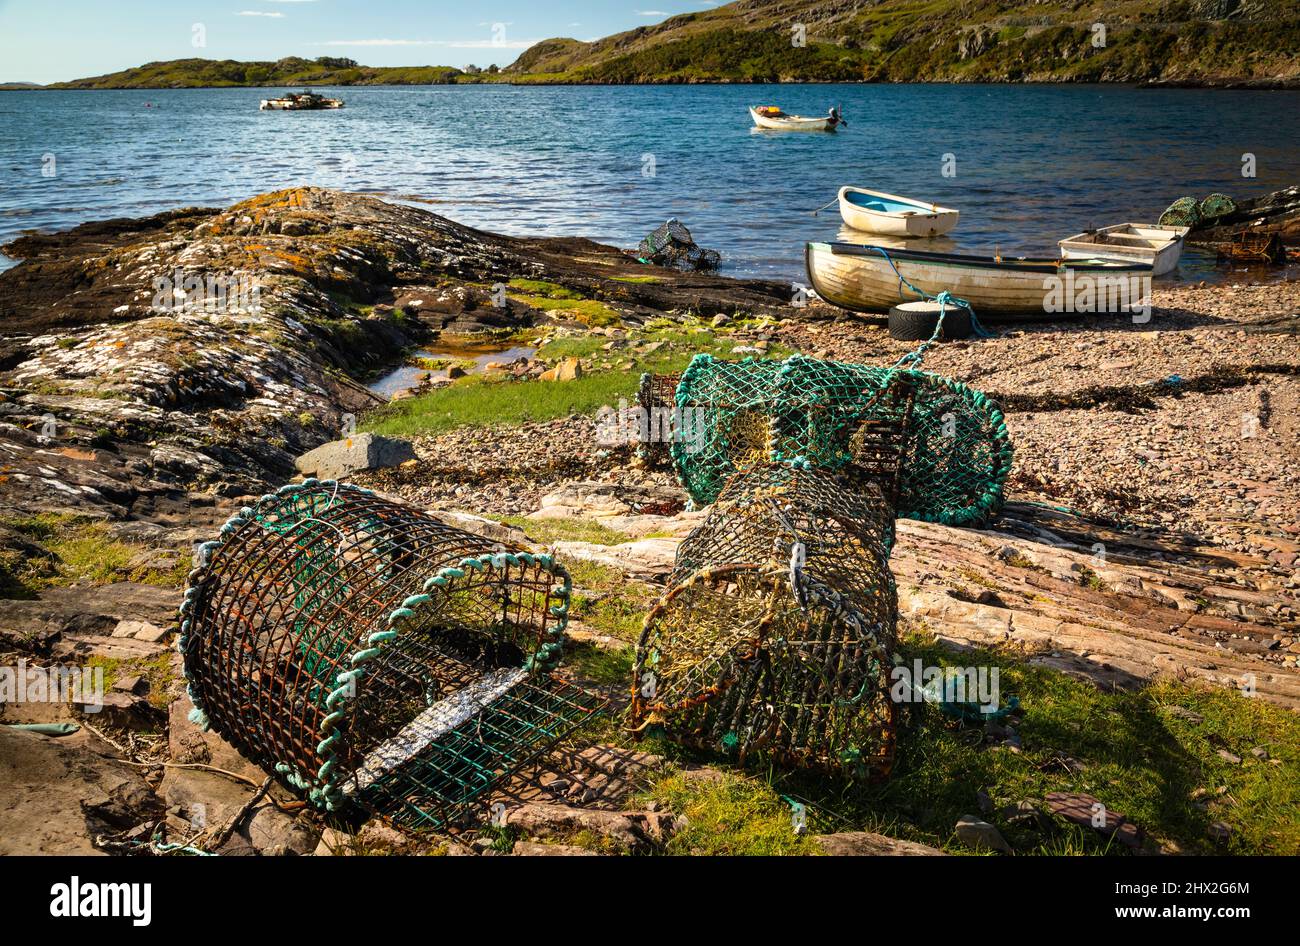 Lobster creels and boats on Killary Bay Little, Connemara, County Galway, Ireland. Stock Photo